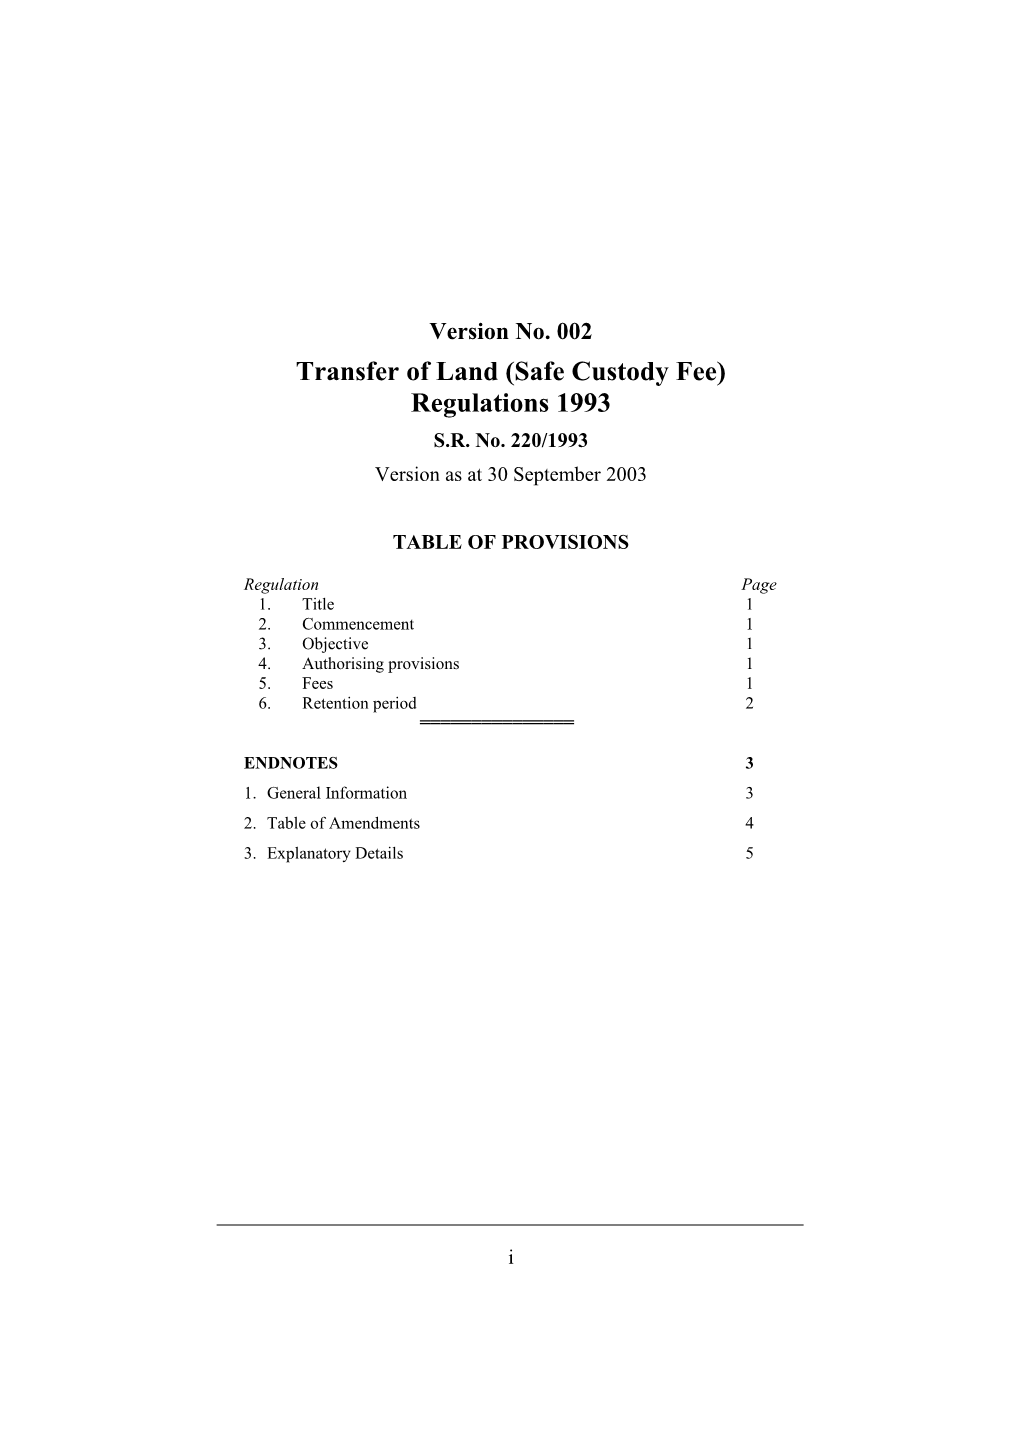 Transfer of Land (Safe Custody Fee) Regulations 1993